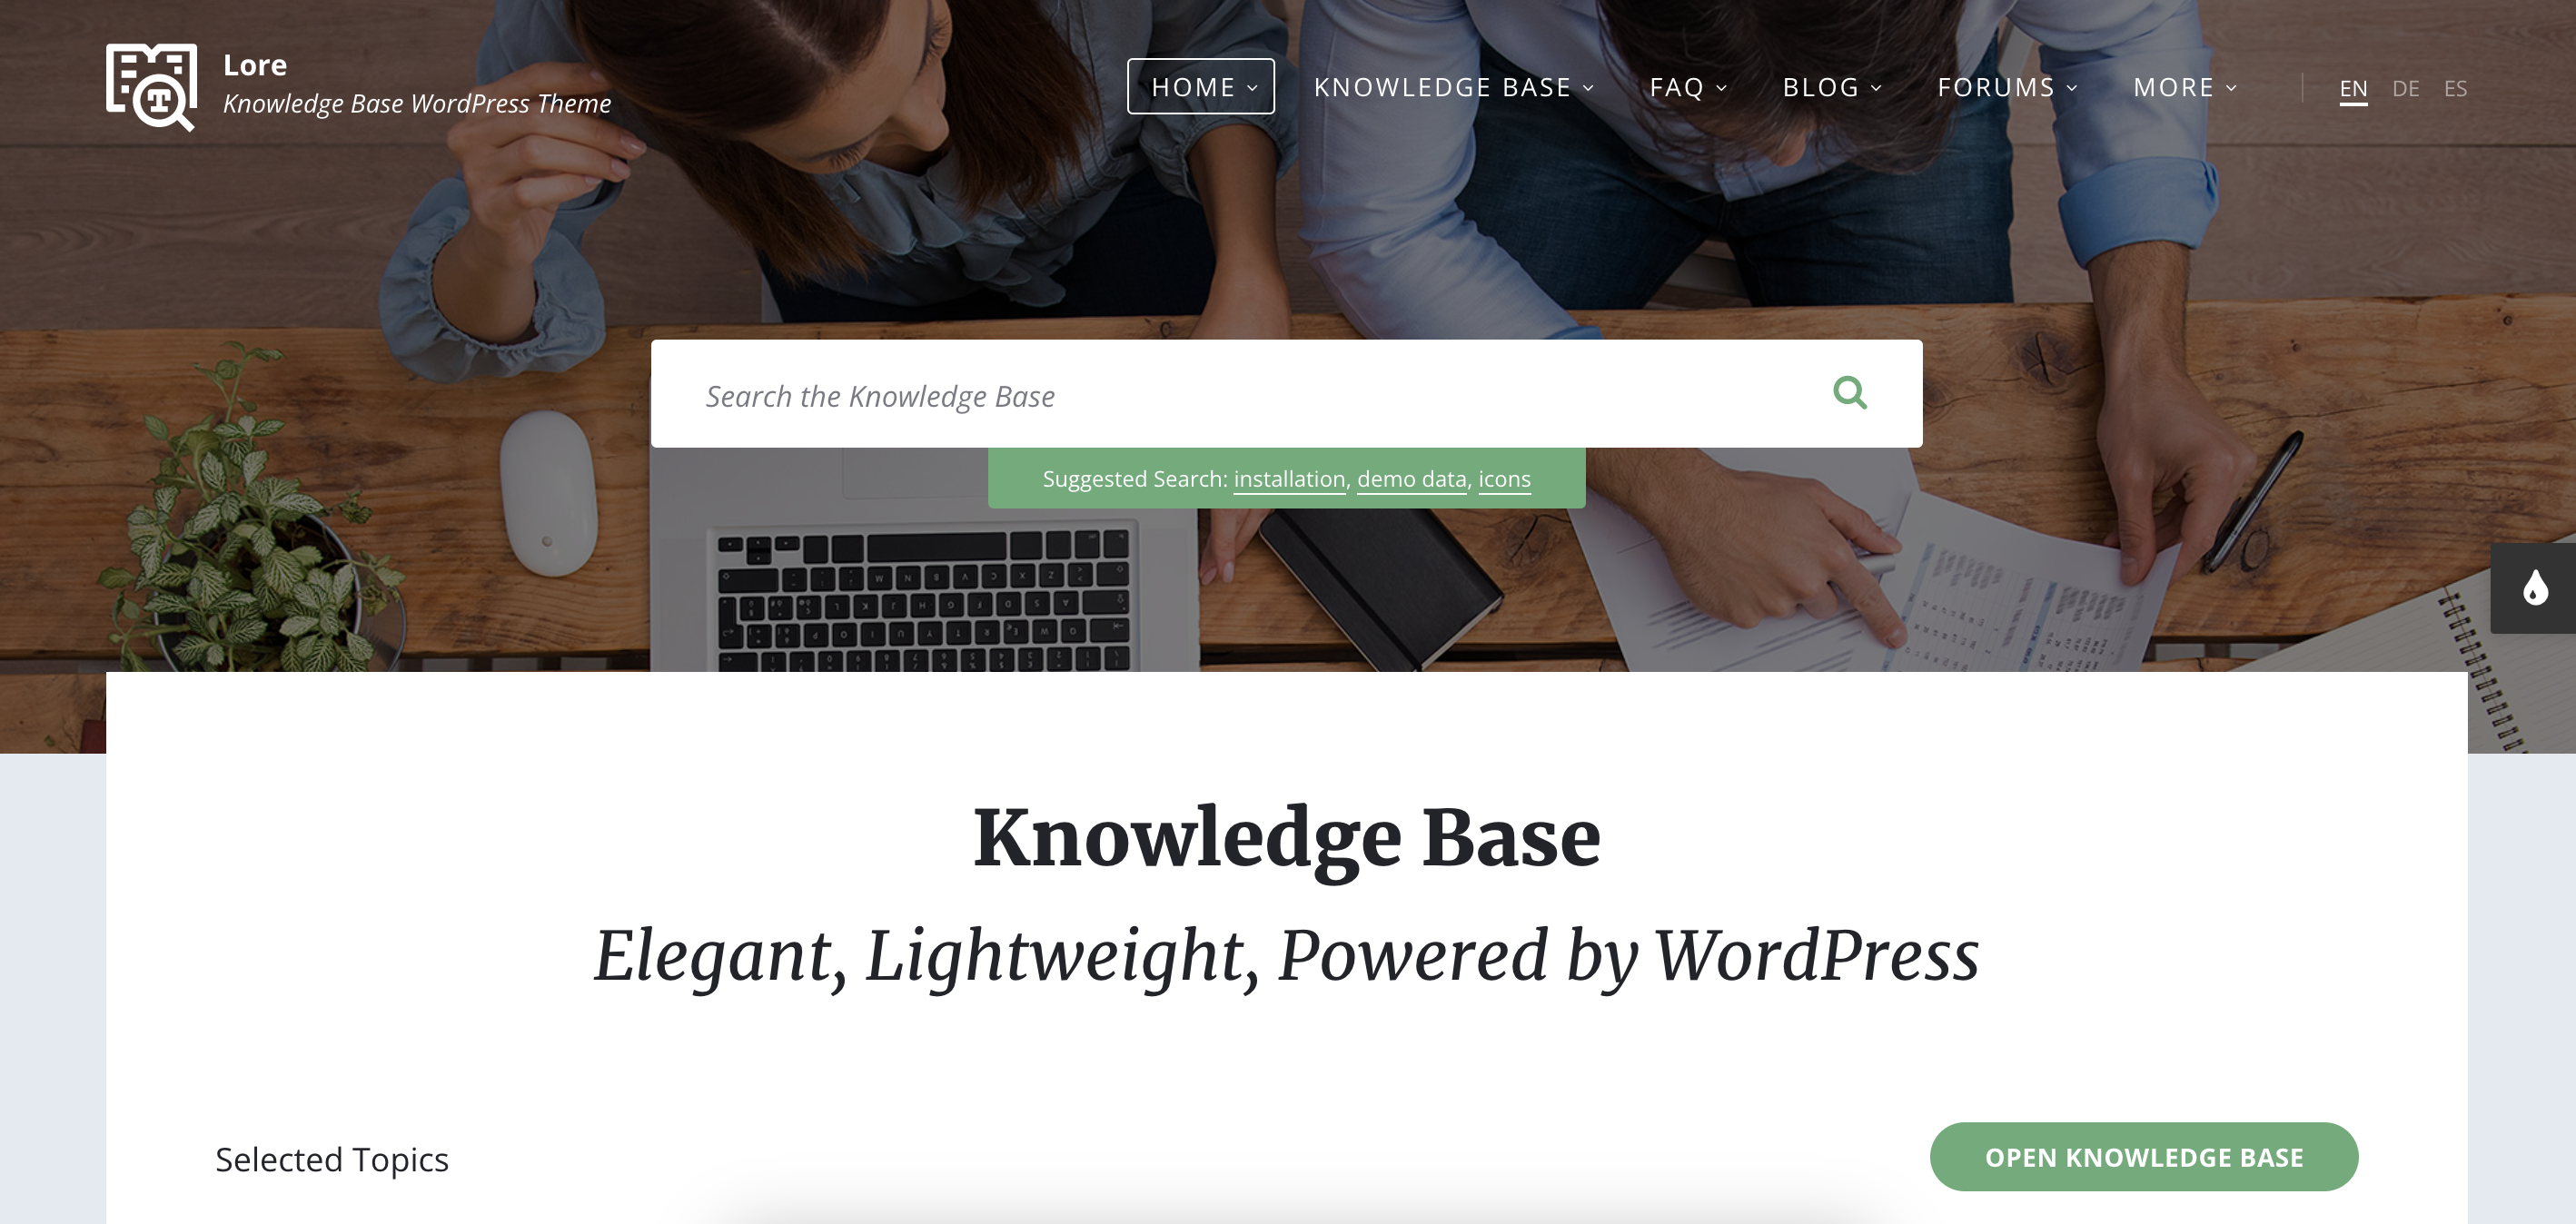 Lore: Knowledge Base WordPress Theme